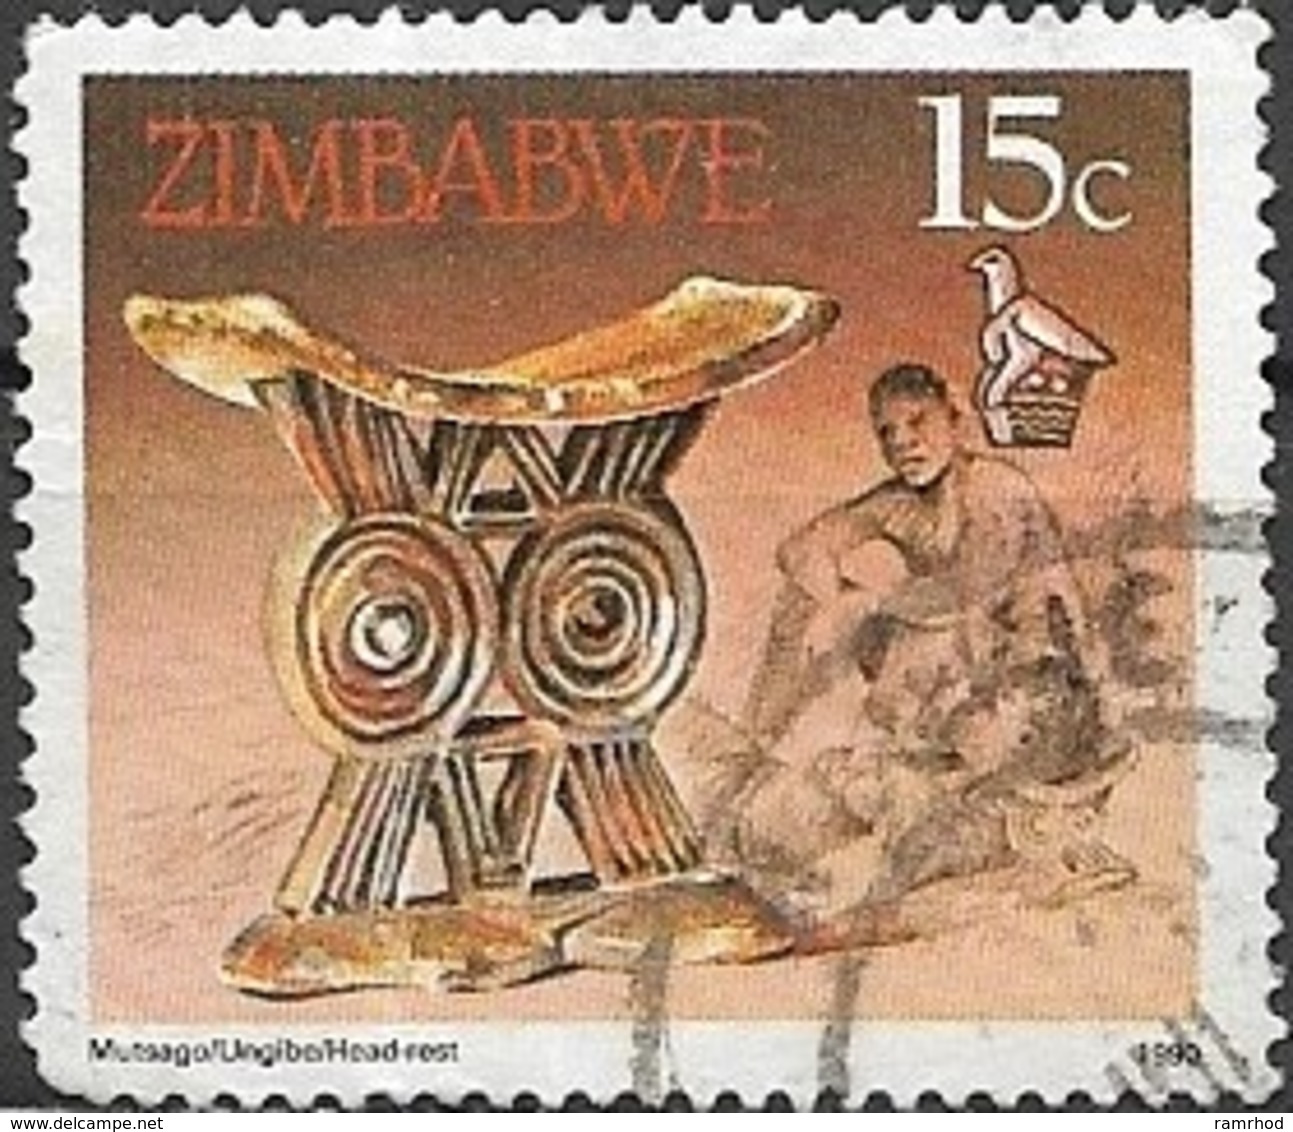 ZIMBABWE 1990 Cultural Artifacts - 15c Headrest  FU - Zimbabwe (1980-...)